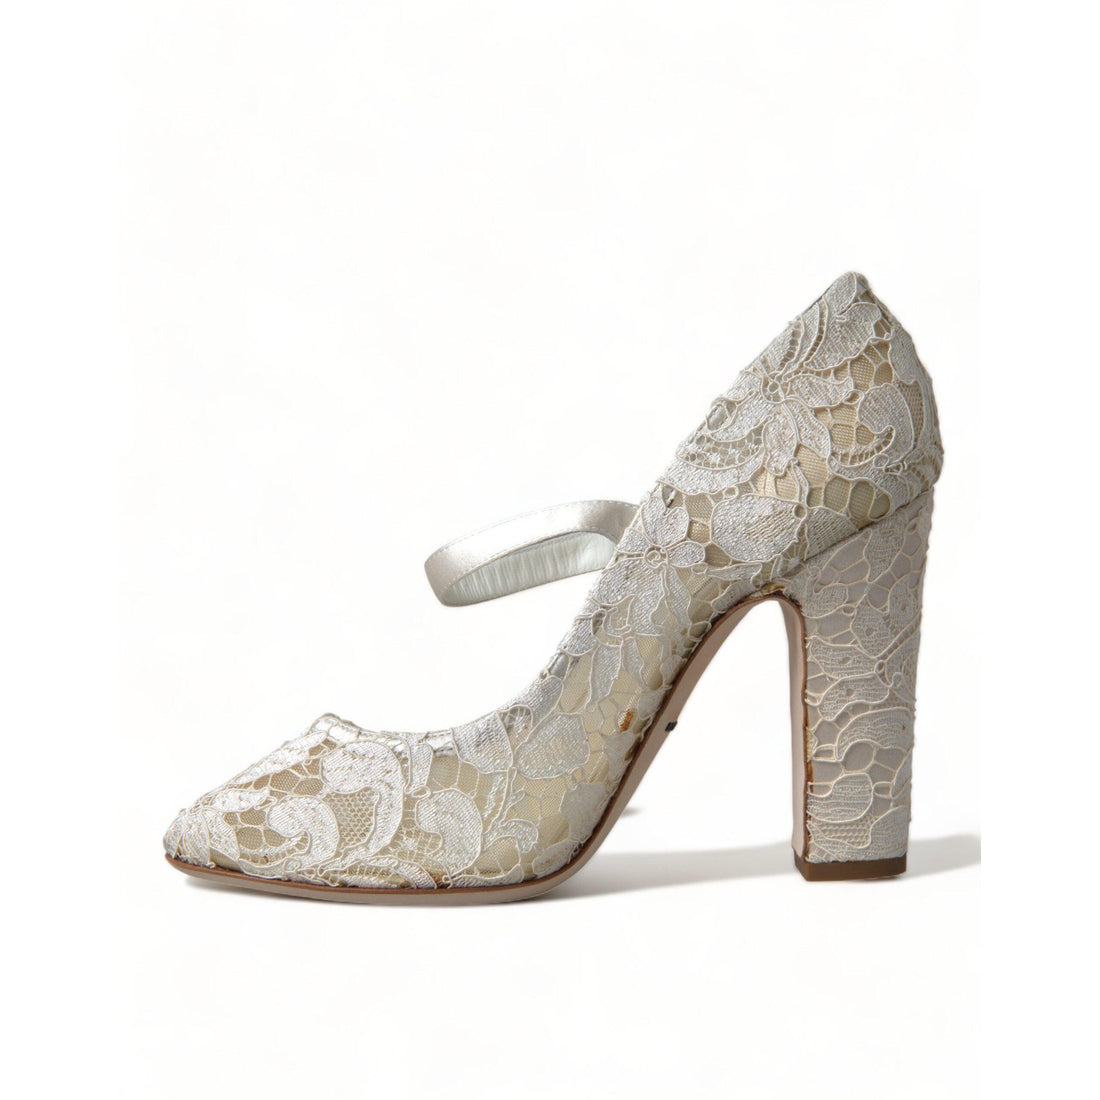 Dolce & Gabbana Chic Lace Block Heels Sandals in Cream White